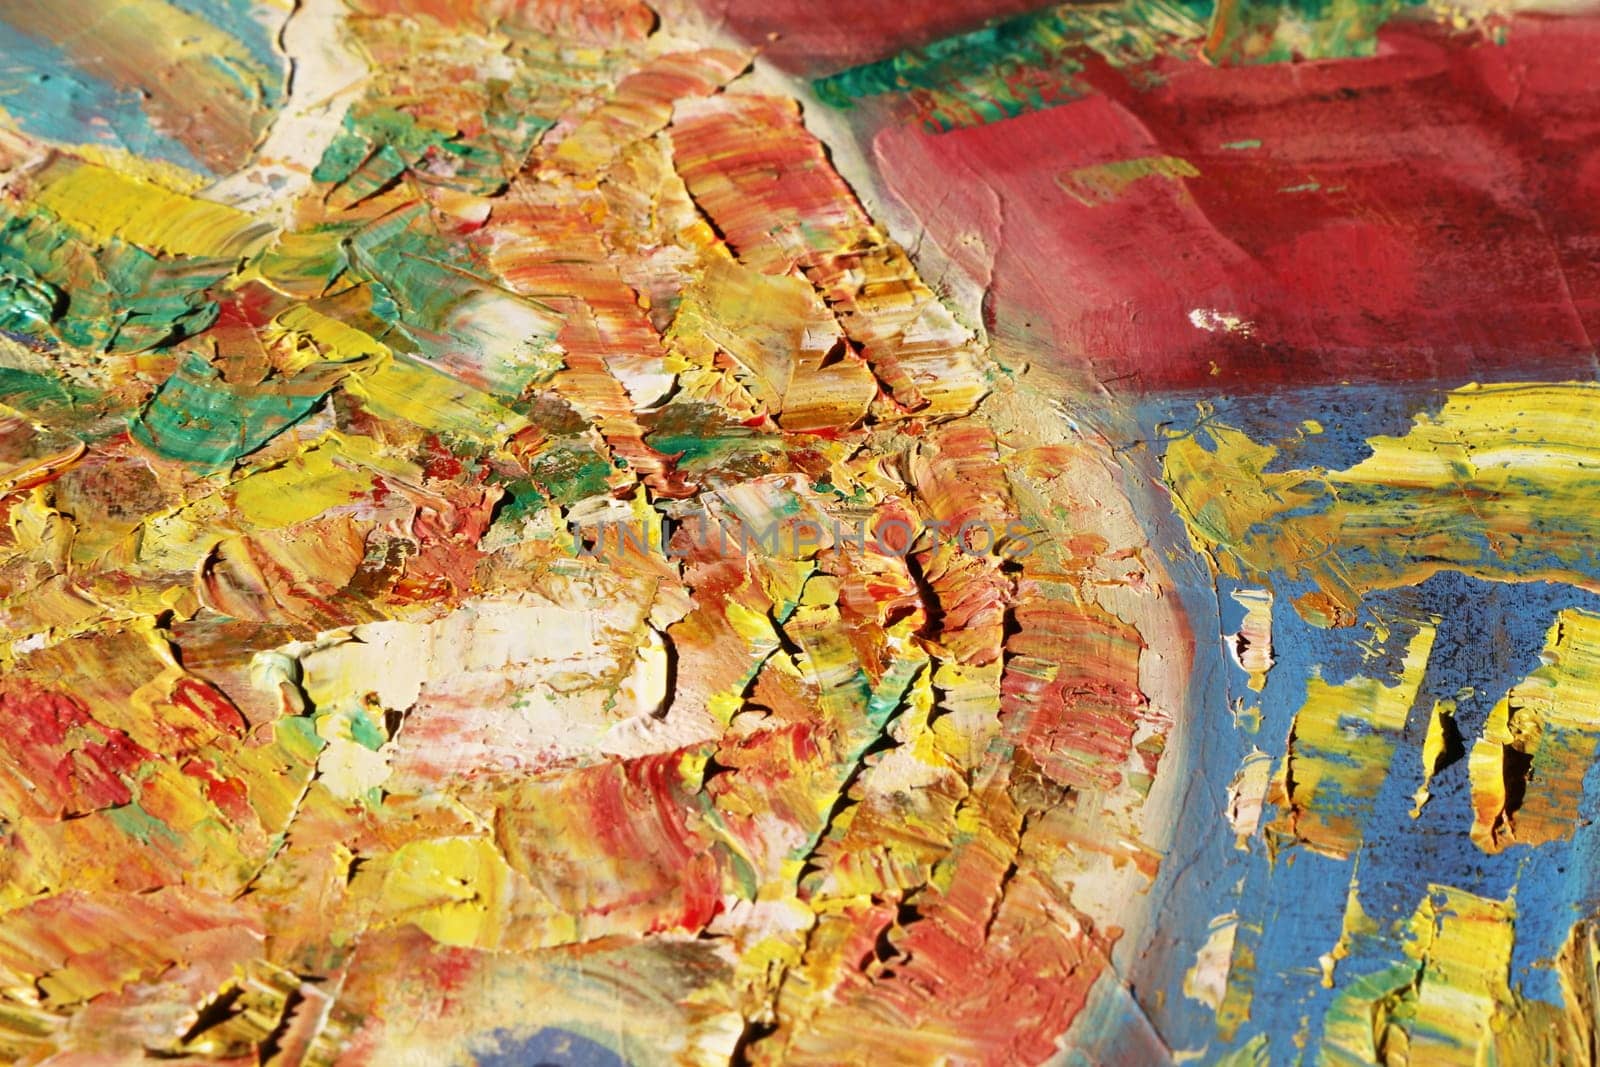 Abstract Texture Symphony: Vibrant Backgrounds for Creative Exploration by DakotaBOldeman